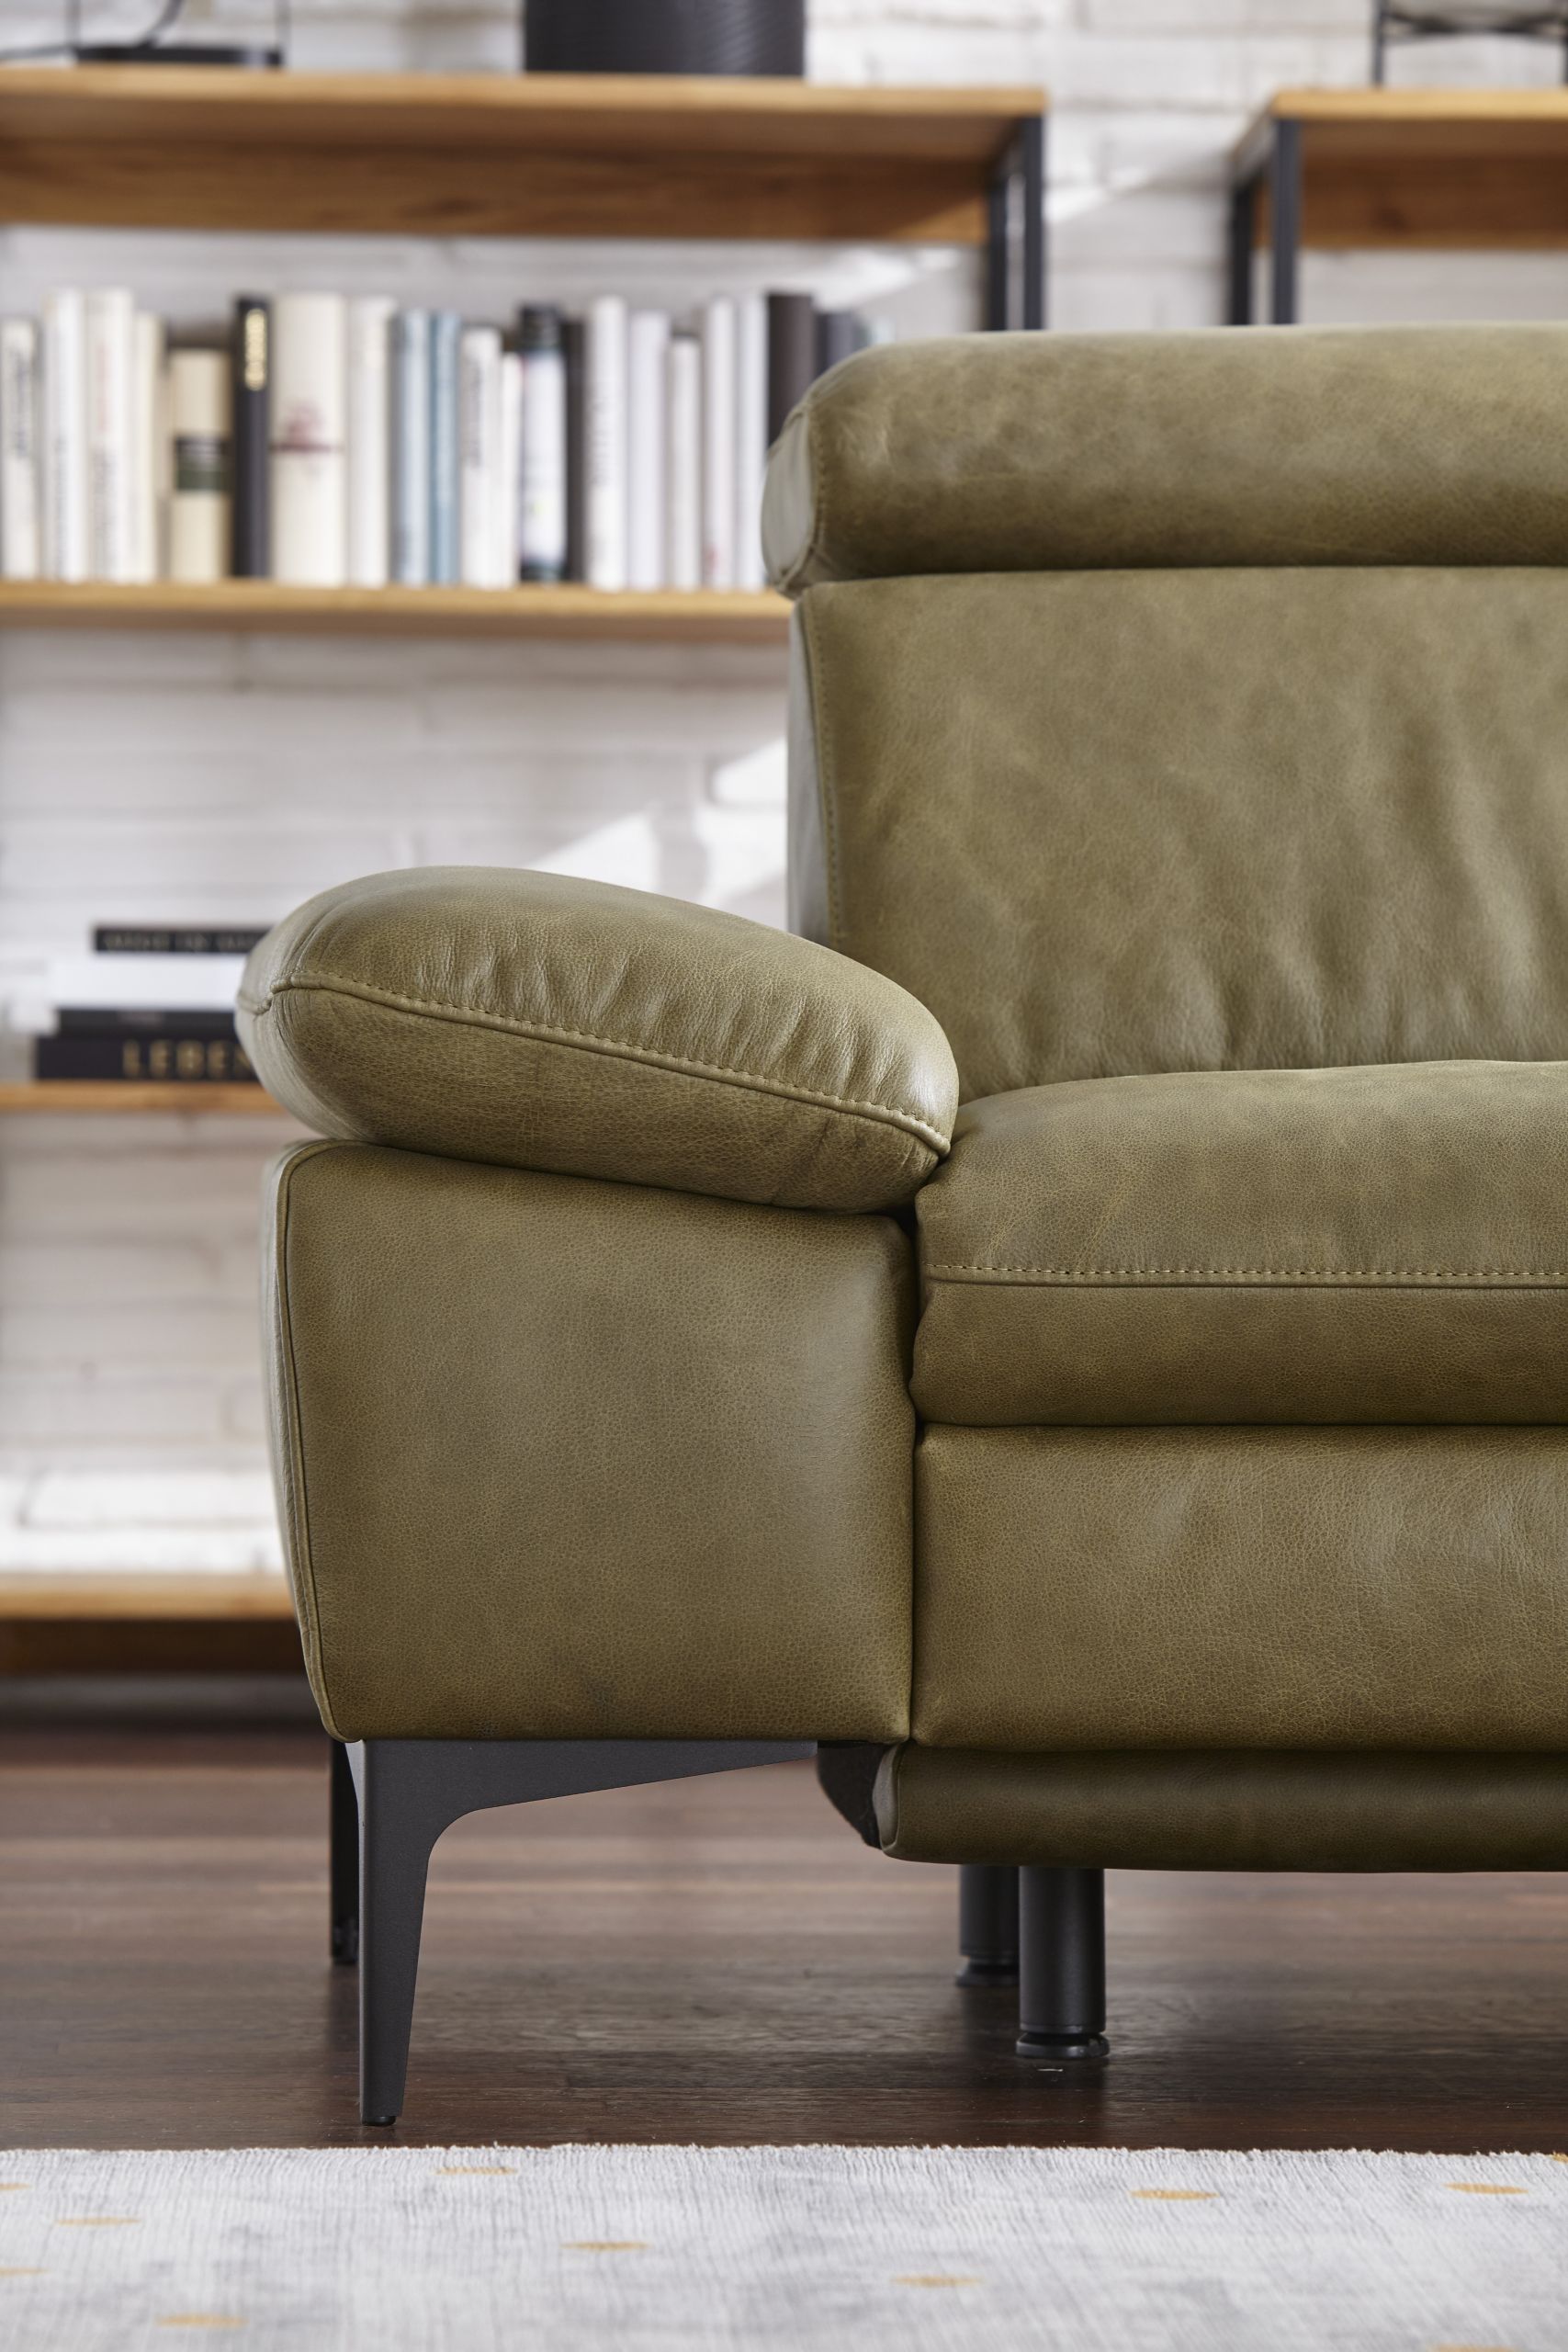 Sofa Felipa – 3-Sitzer inkl. Relaxfunktion (motorisch) und Kopfteil verstellbar, Leder, Olive